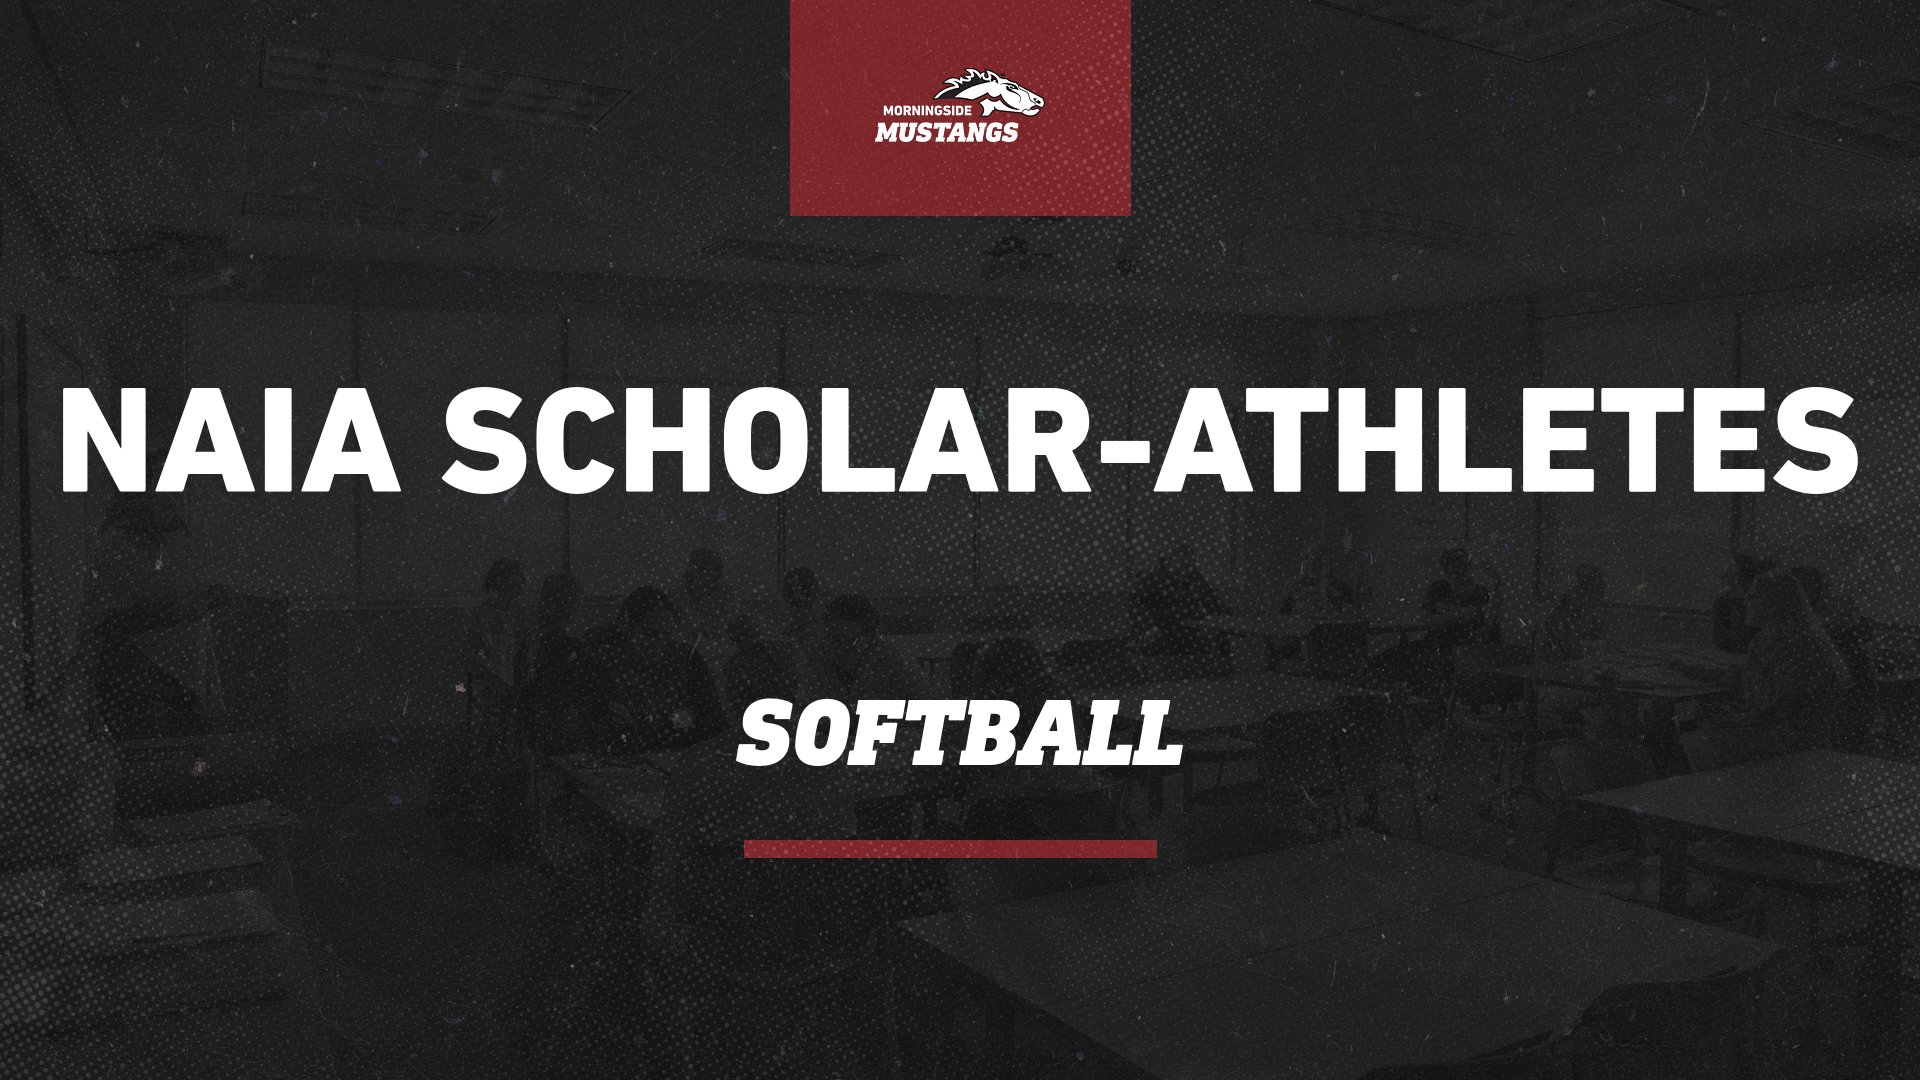 Mustangs place 10 on softball scholar-athlete list